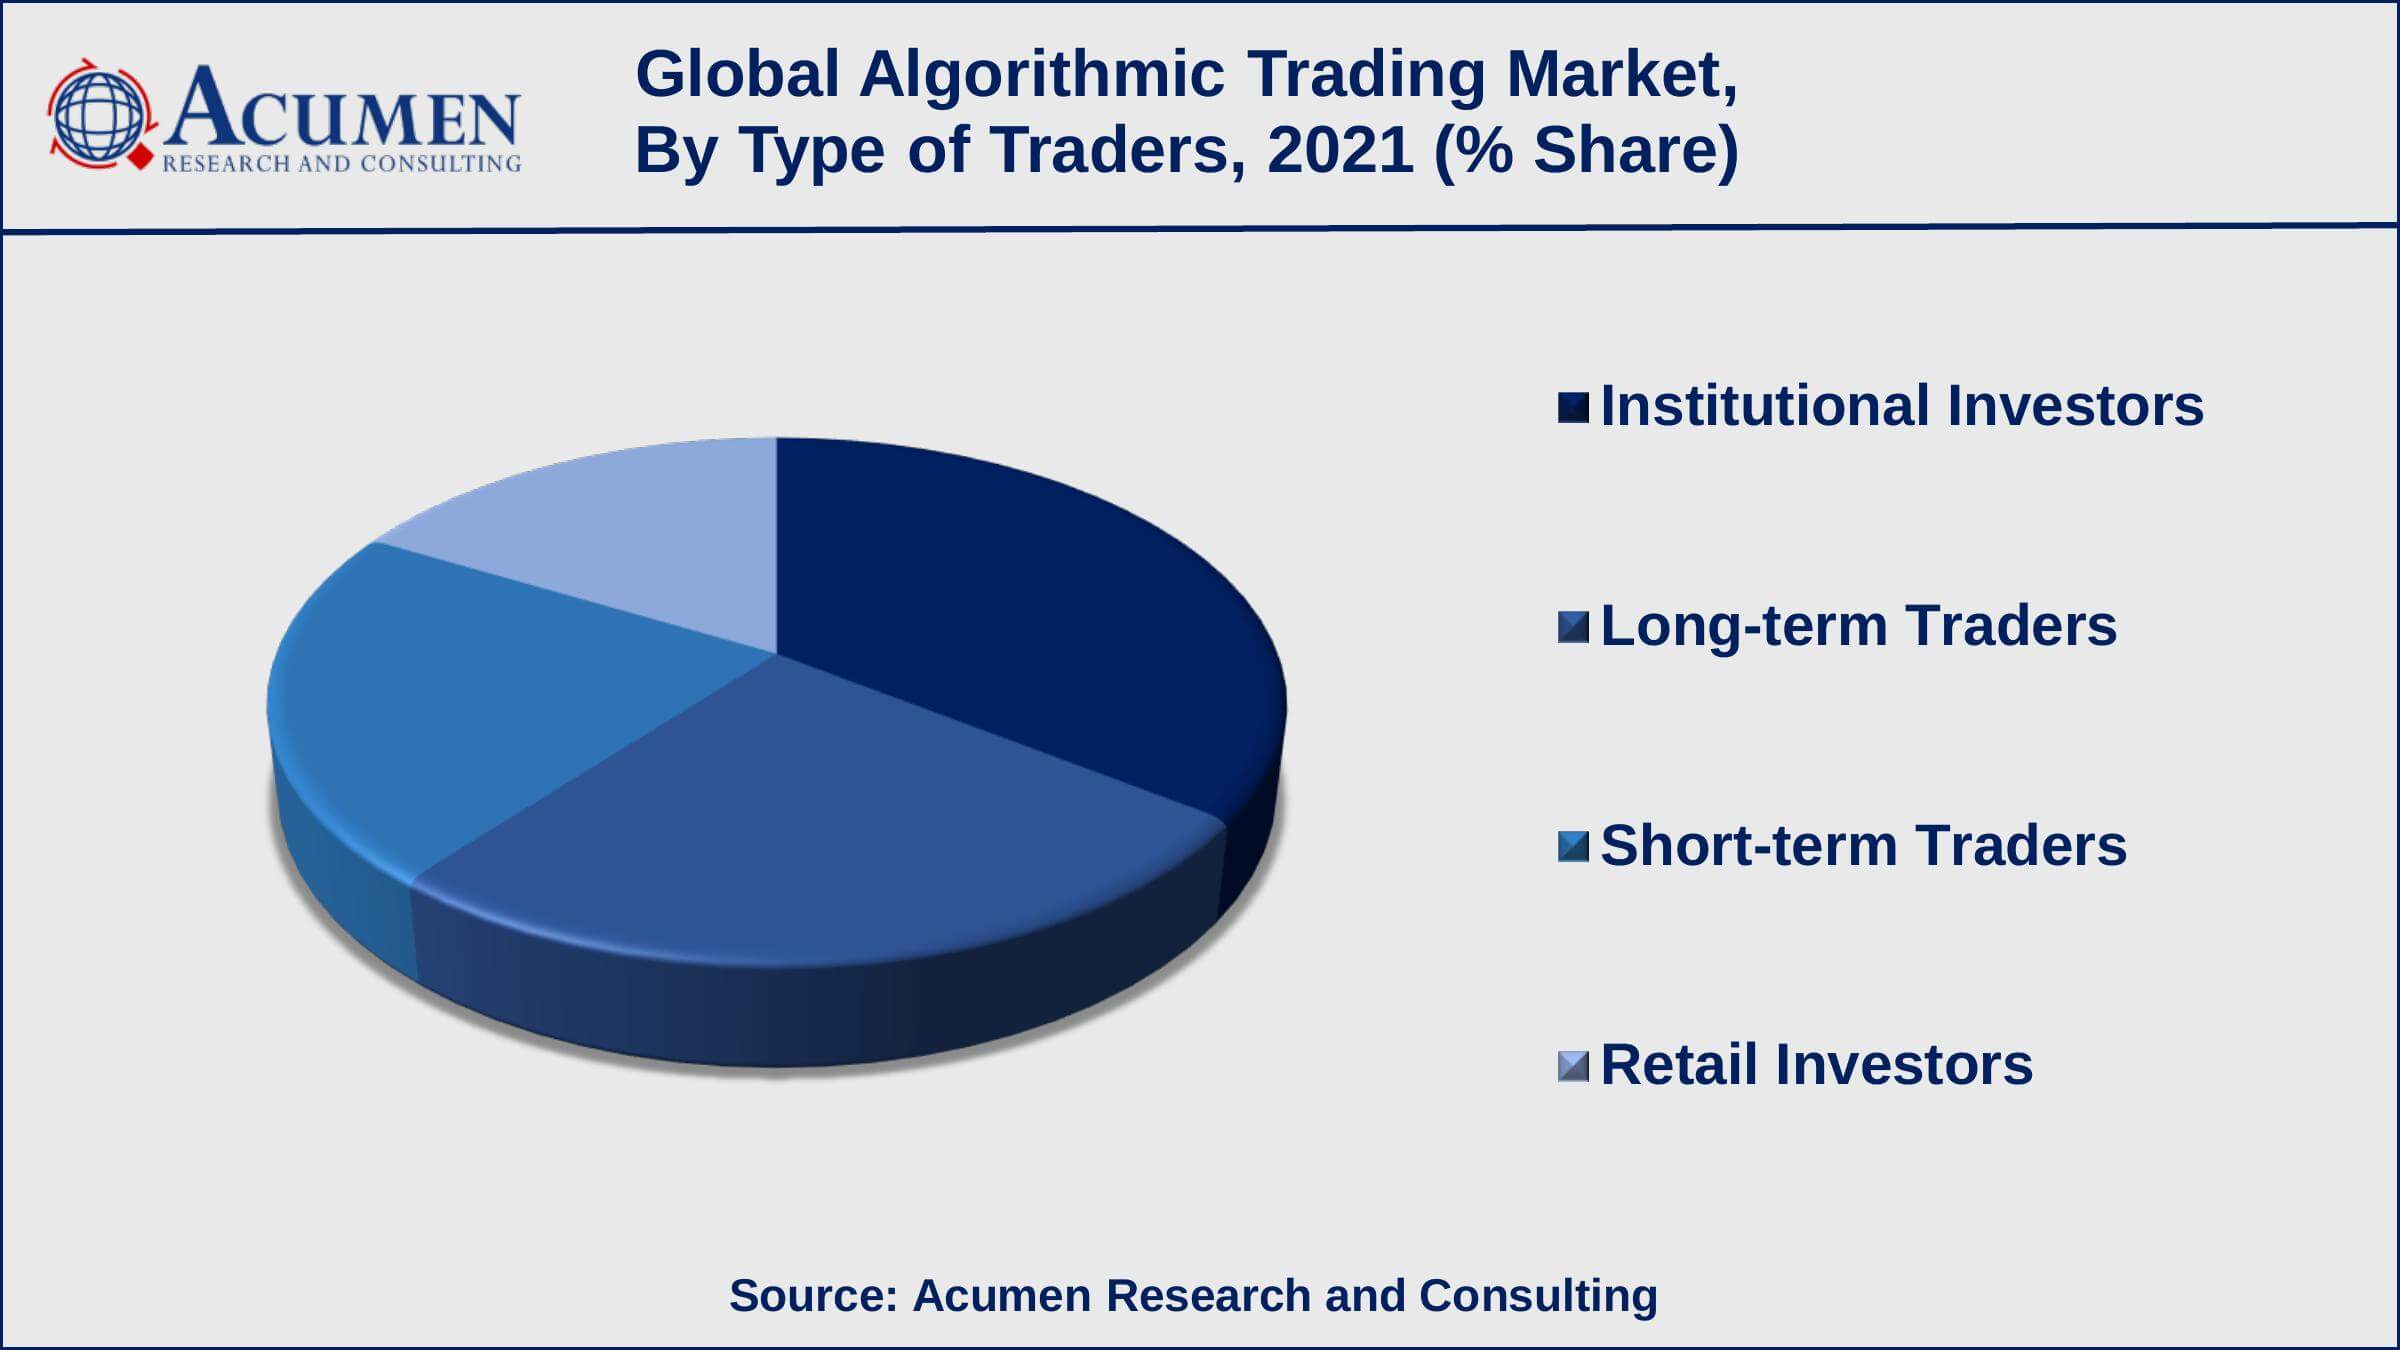 Global Algorithmic Trading Market Dynamics